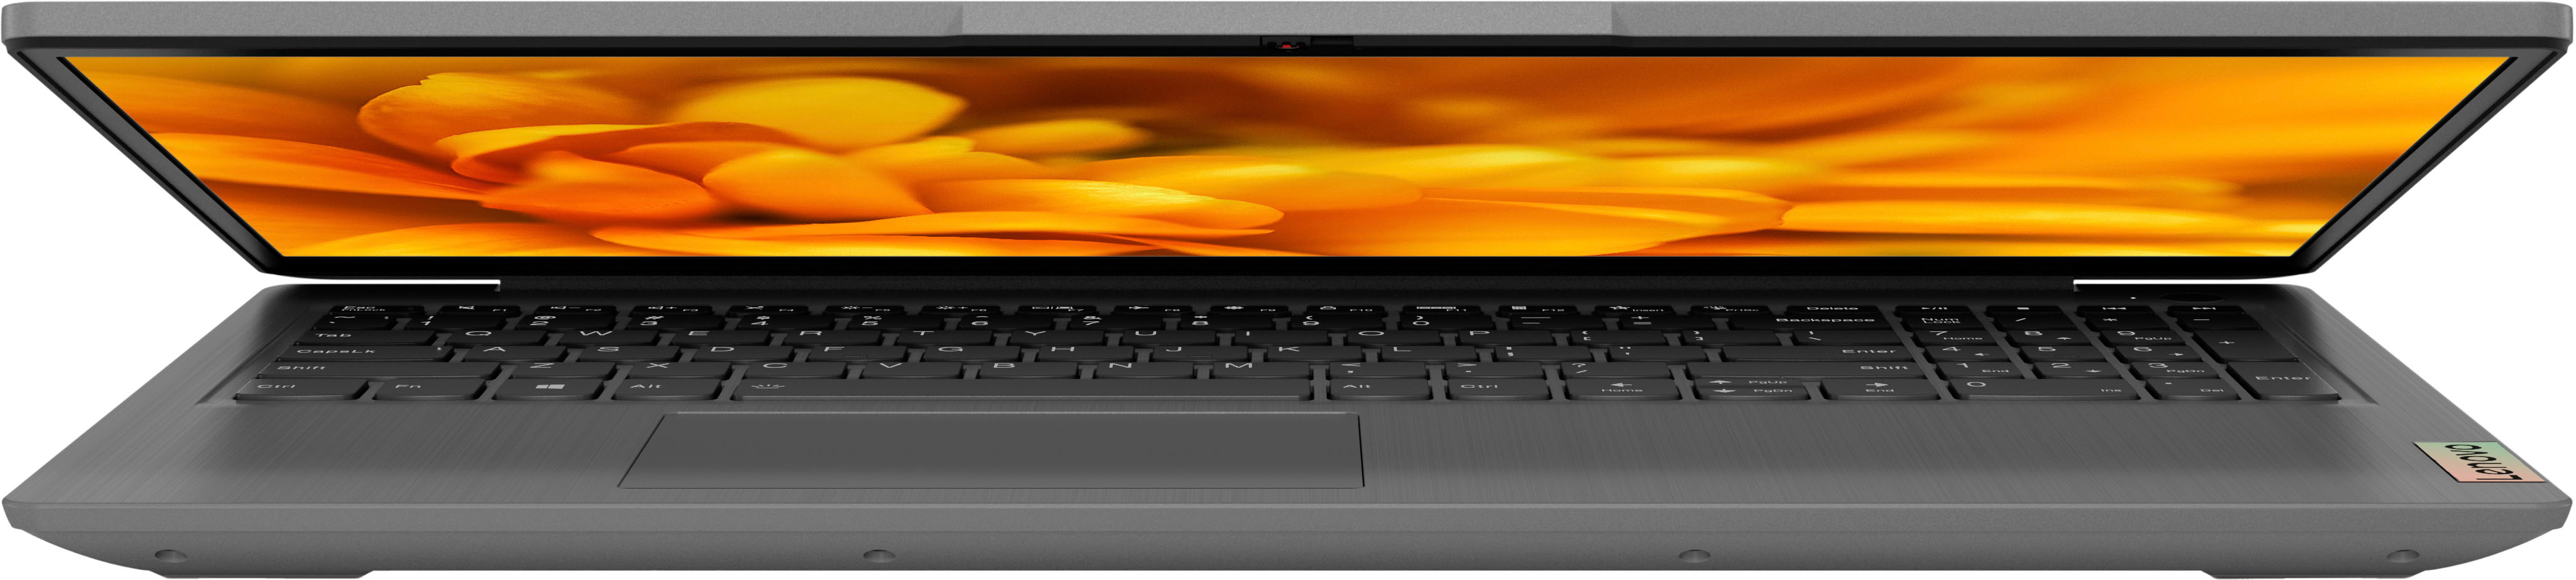 Core Laptop Grey 8GB with FHD SSD 256GB Ideapad - 15.6\